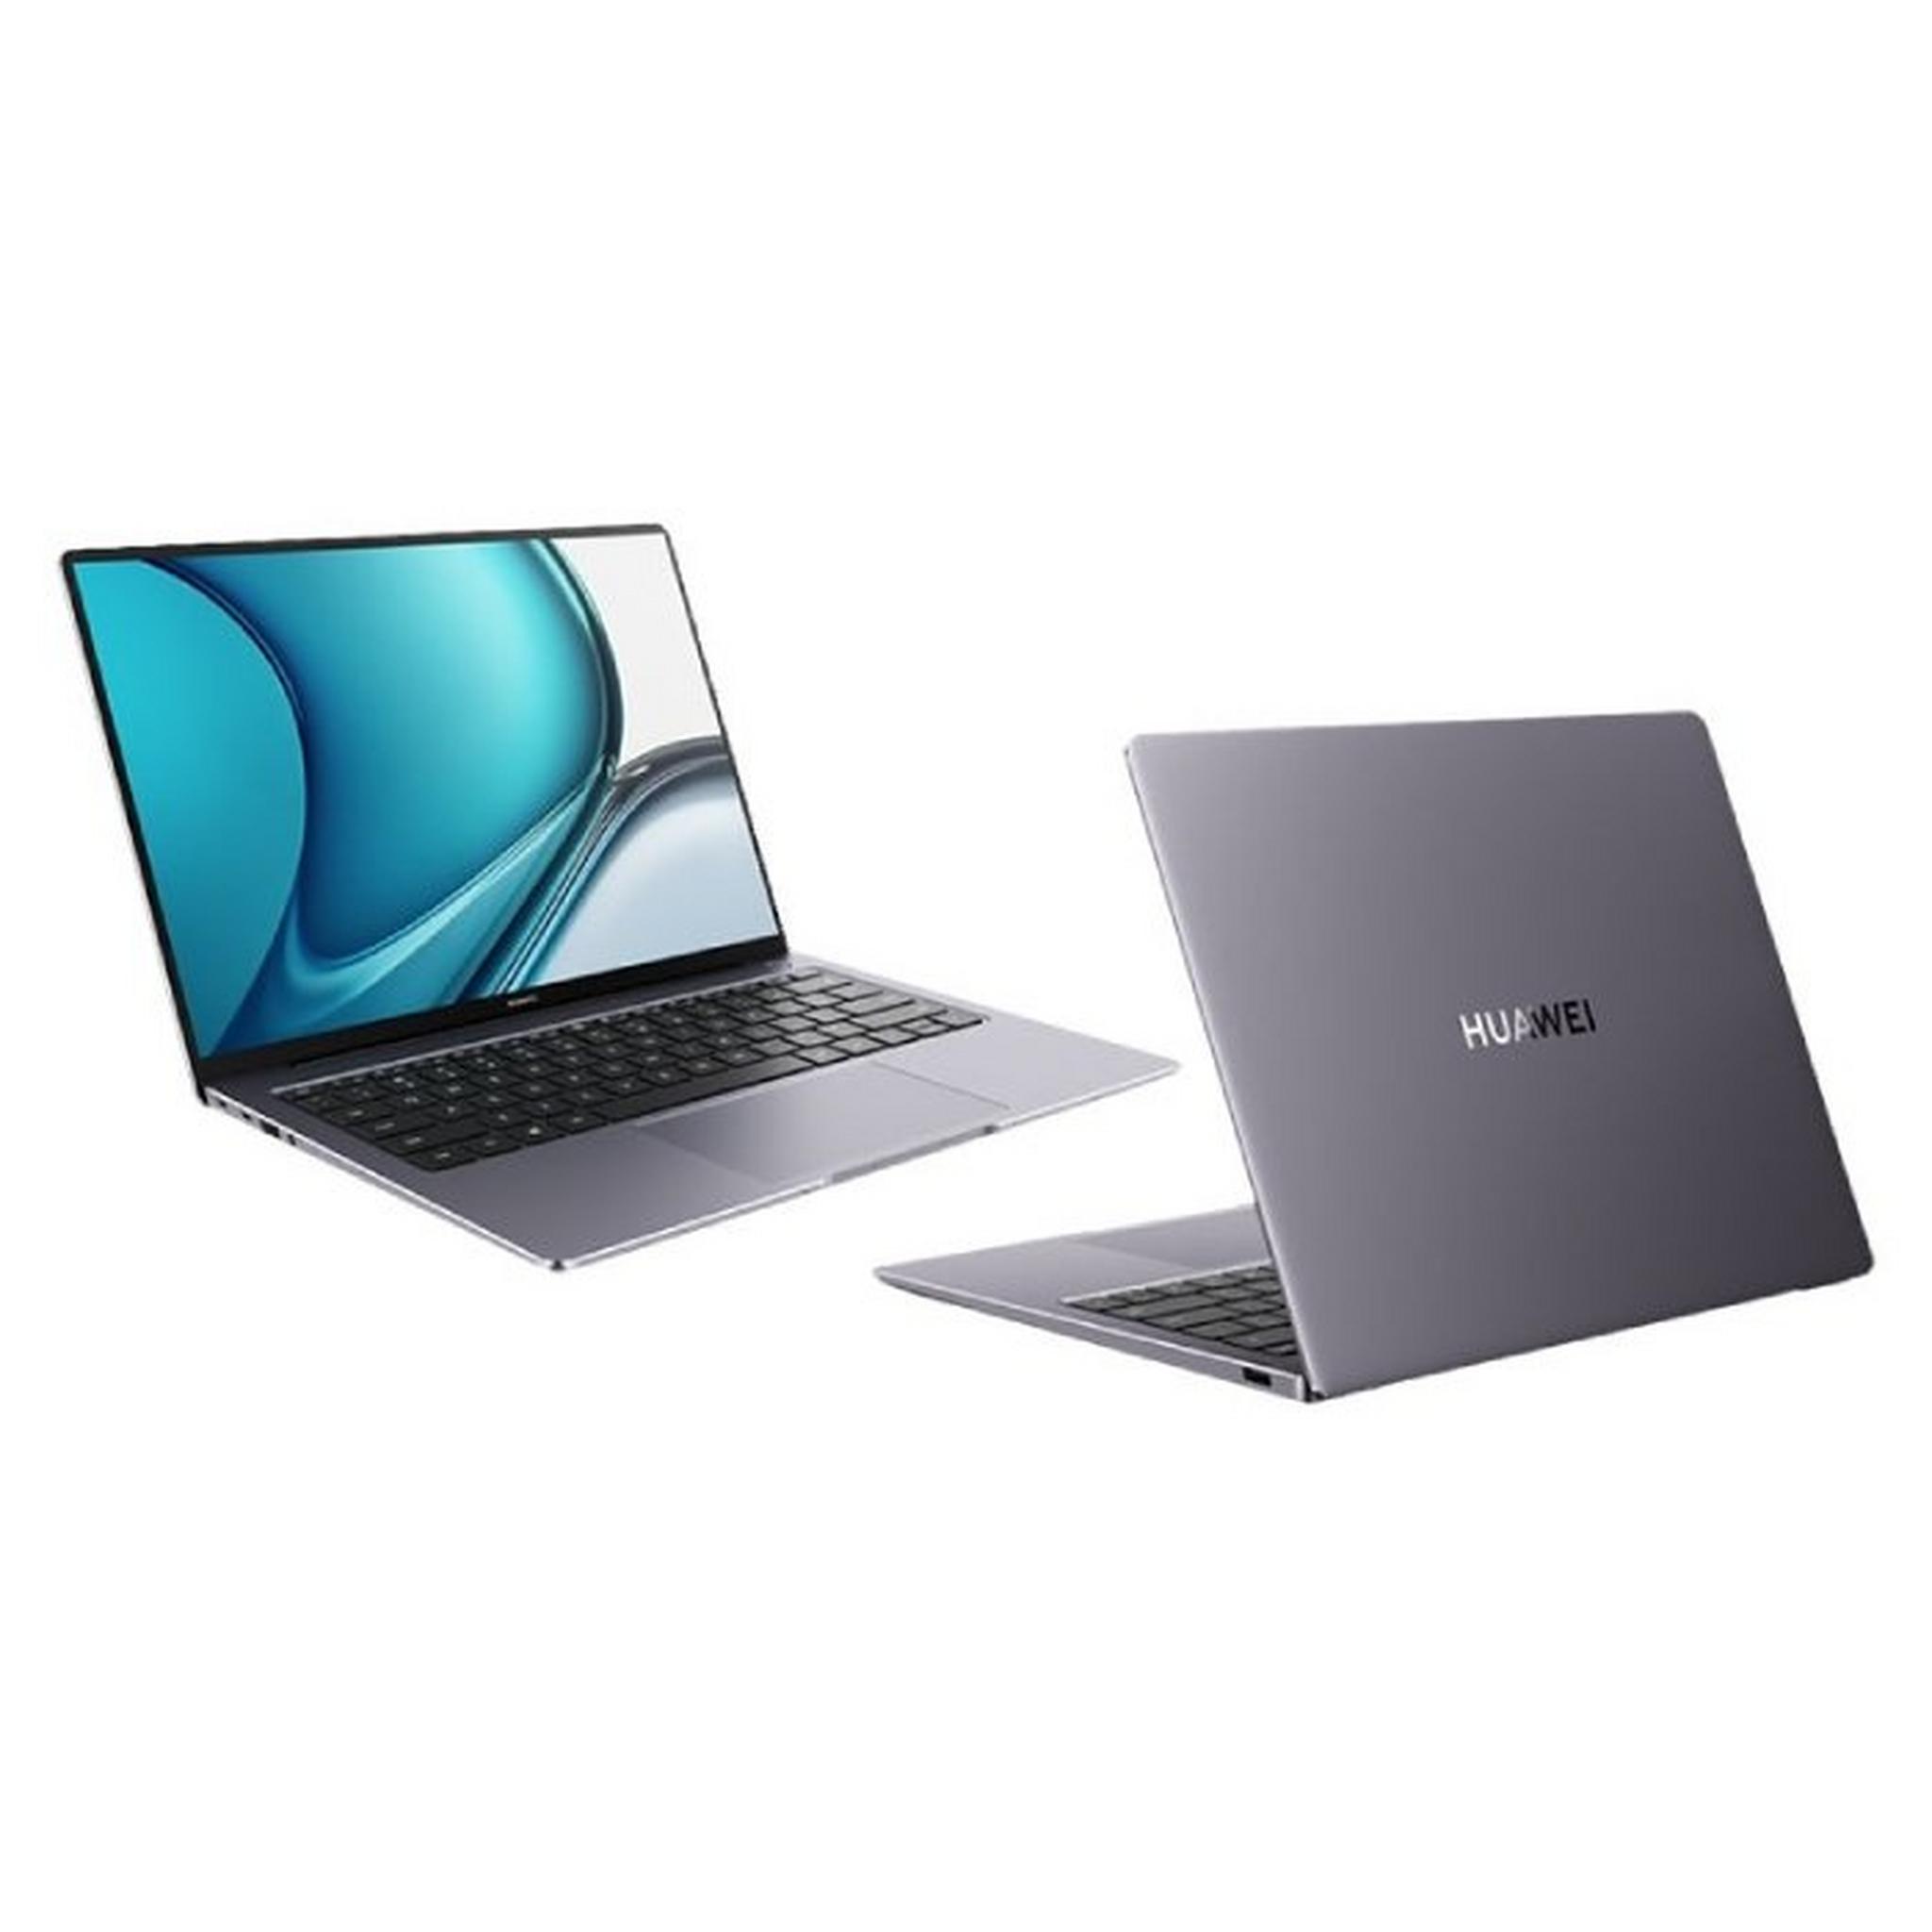 Huawei Matebook 14s Intel Core i7 11th Gen, 16GB RAM, 512GB SSD, 14.2-inch Laptop - Grey